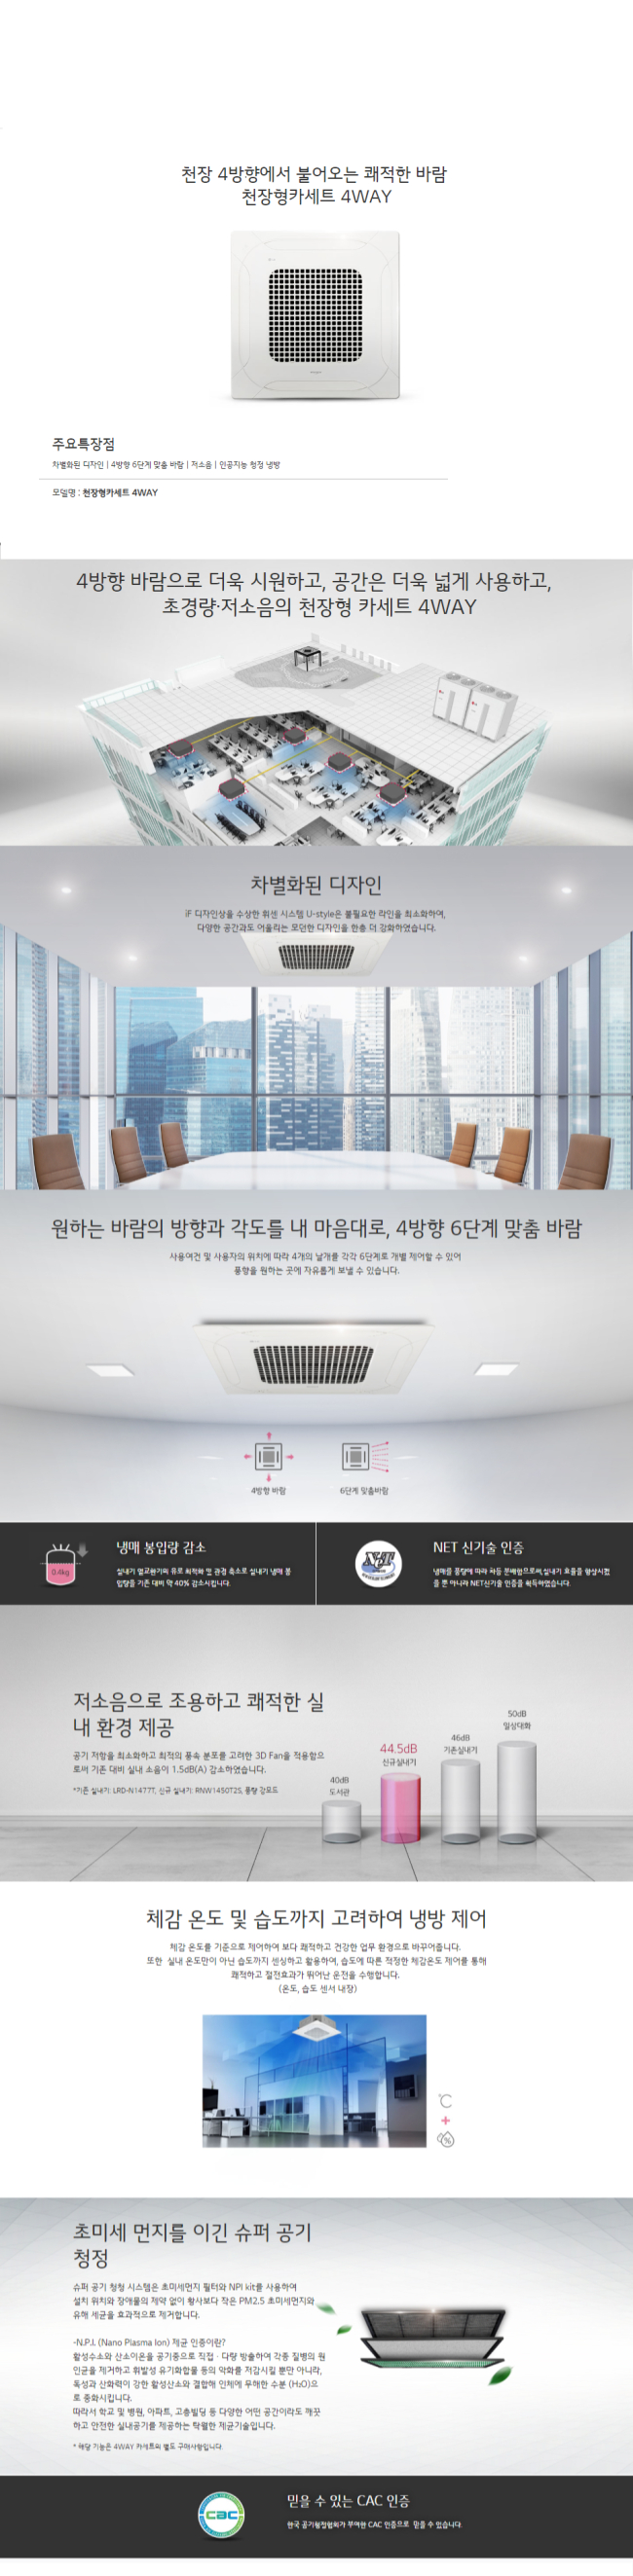 _screencapture-lge-co-kr-kr-business-product-cooling-indoor-ceiling-4way-2019-04-22-17_36_12 (2).jpg